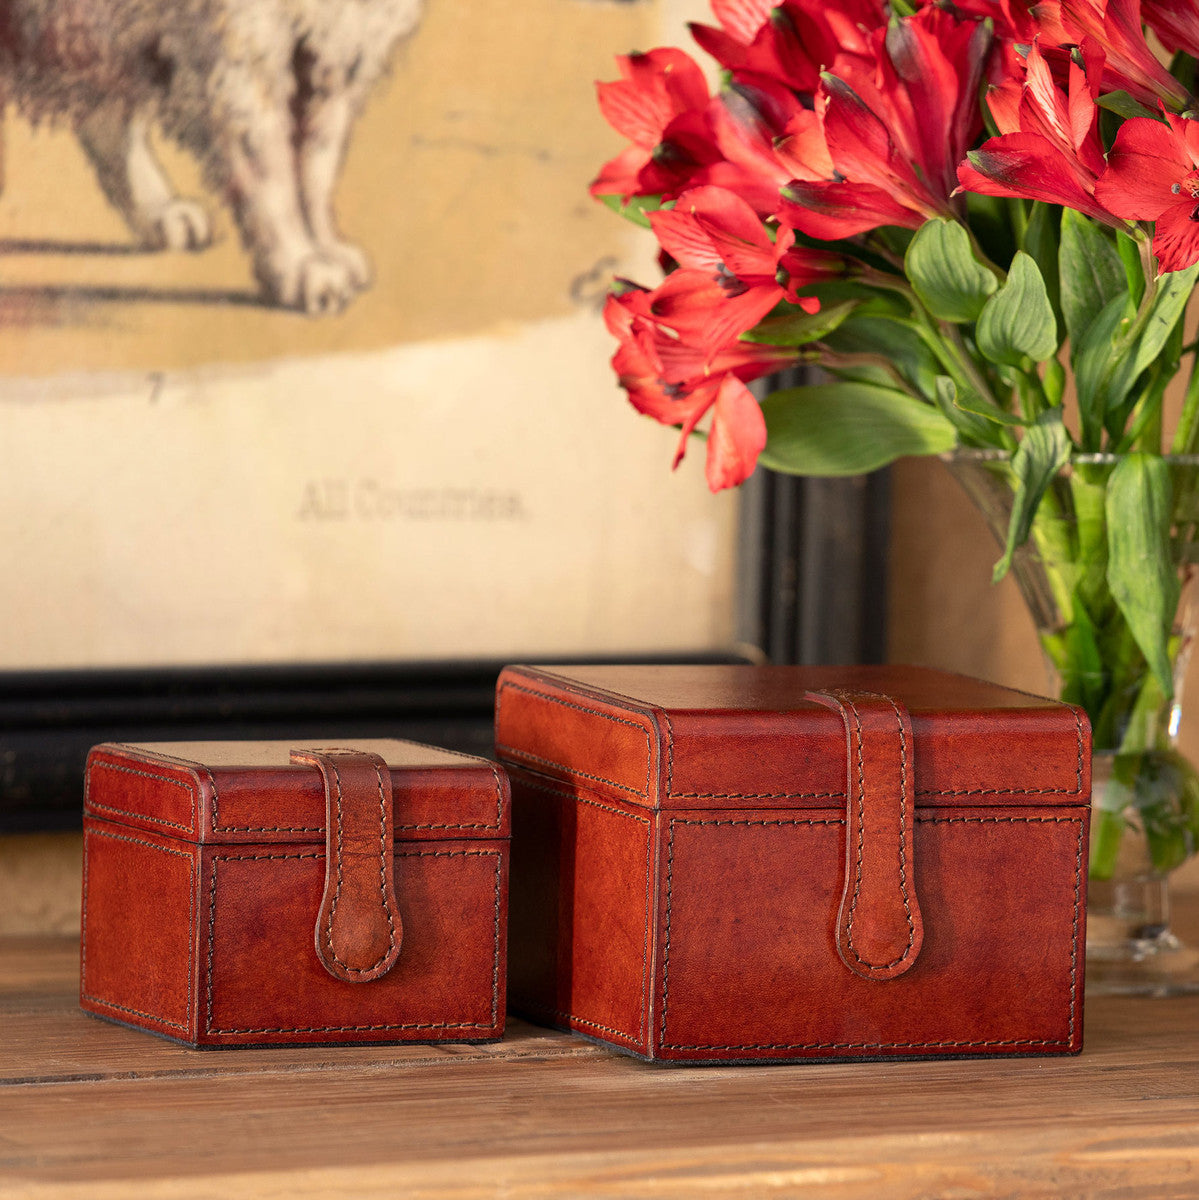 Leather Valet Storage Boxes - Set of 2